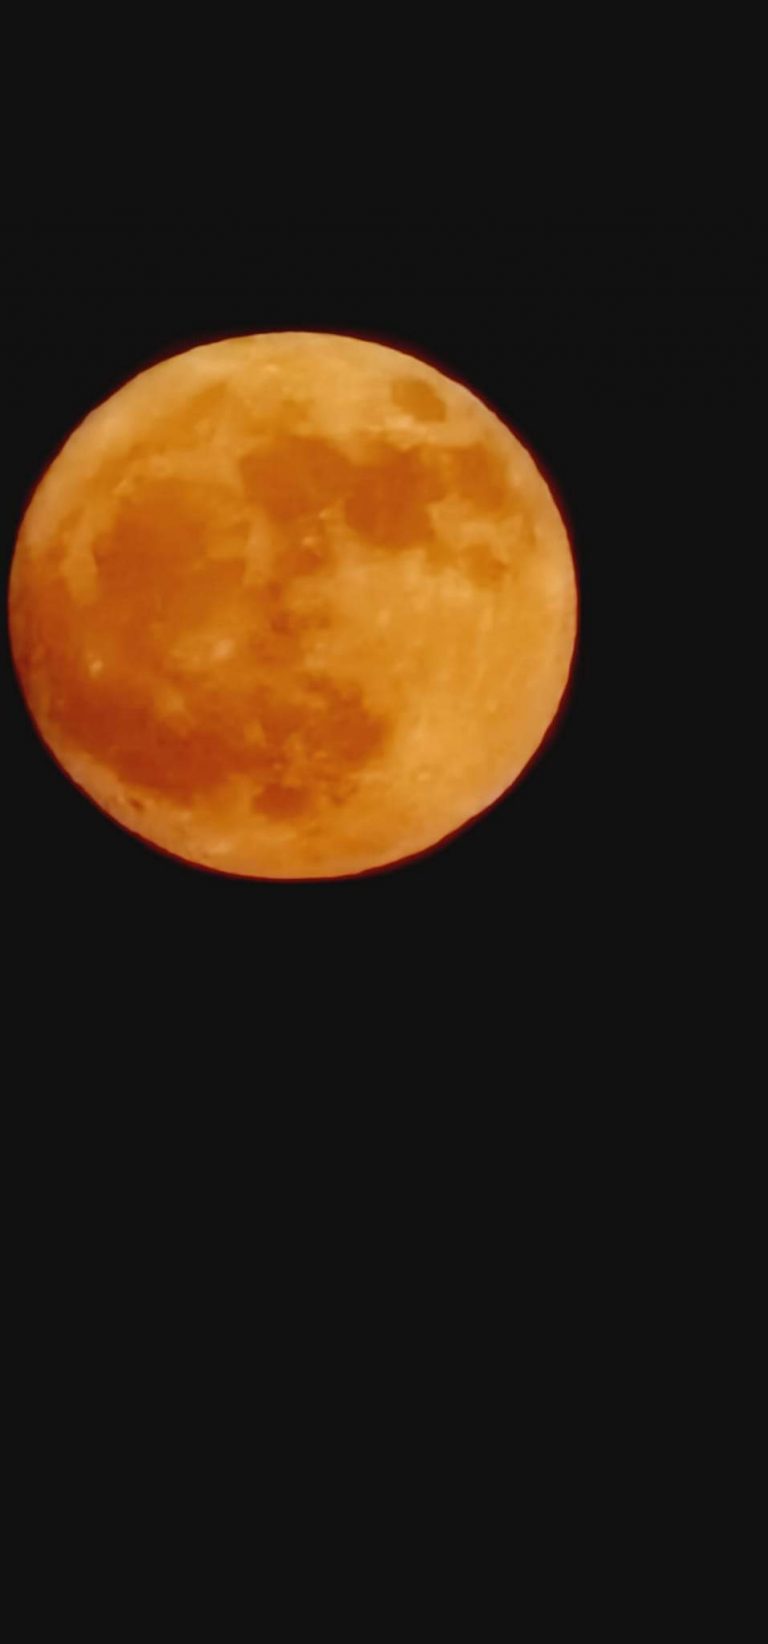 Maravilla a chihuahuenses luna naranja